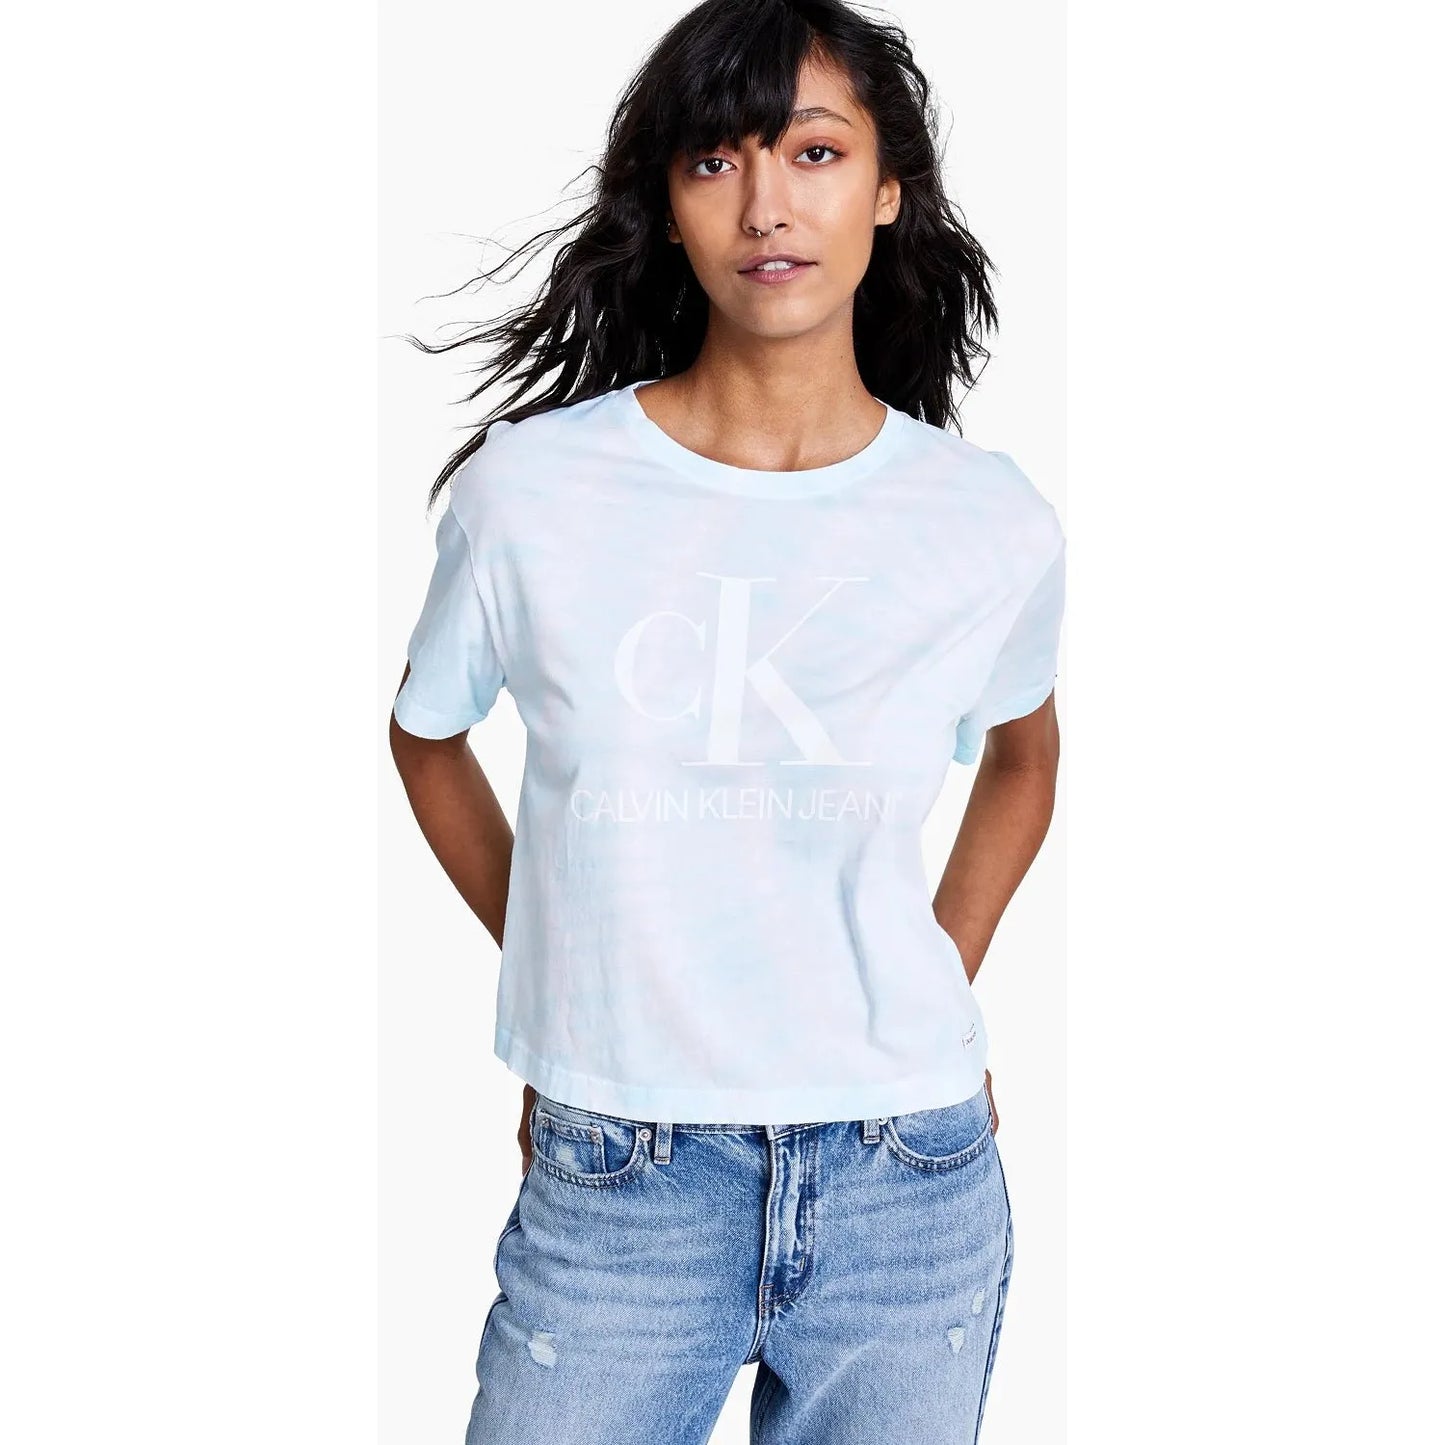 Calvin Klein-Calvin Klein Jeans Tie-Dyed Logo T-Shirt, Blue, Size: M - Brandat Outlet